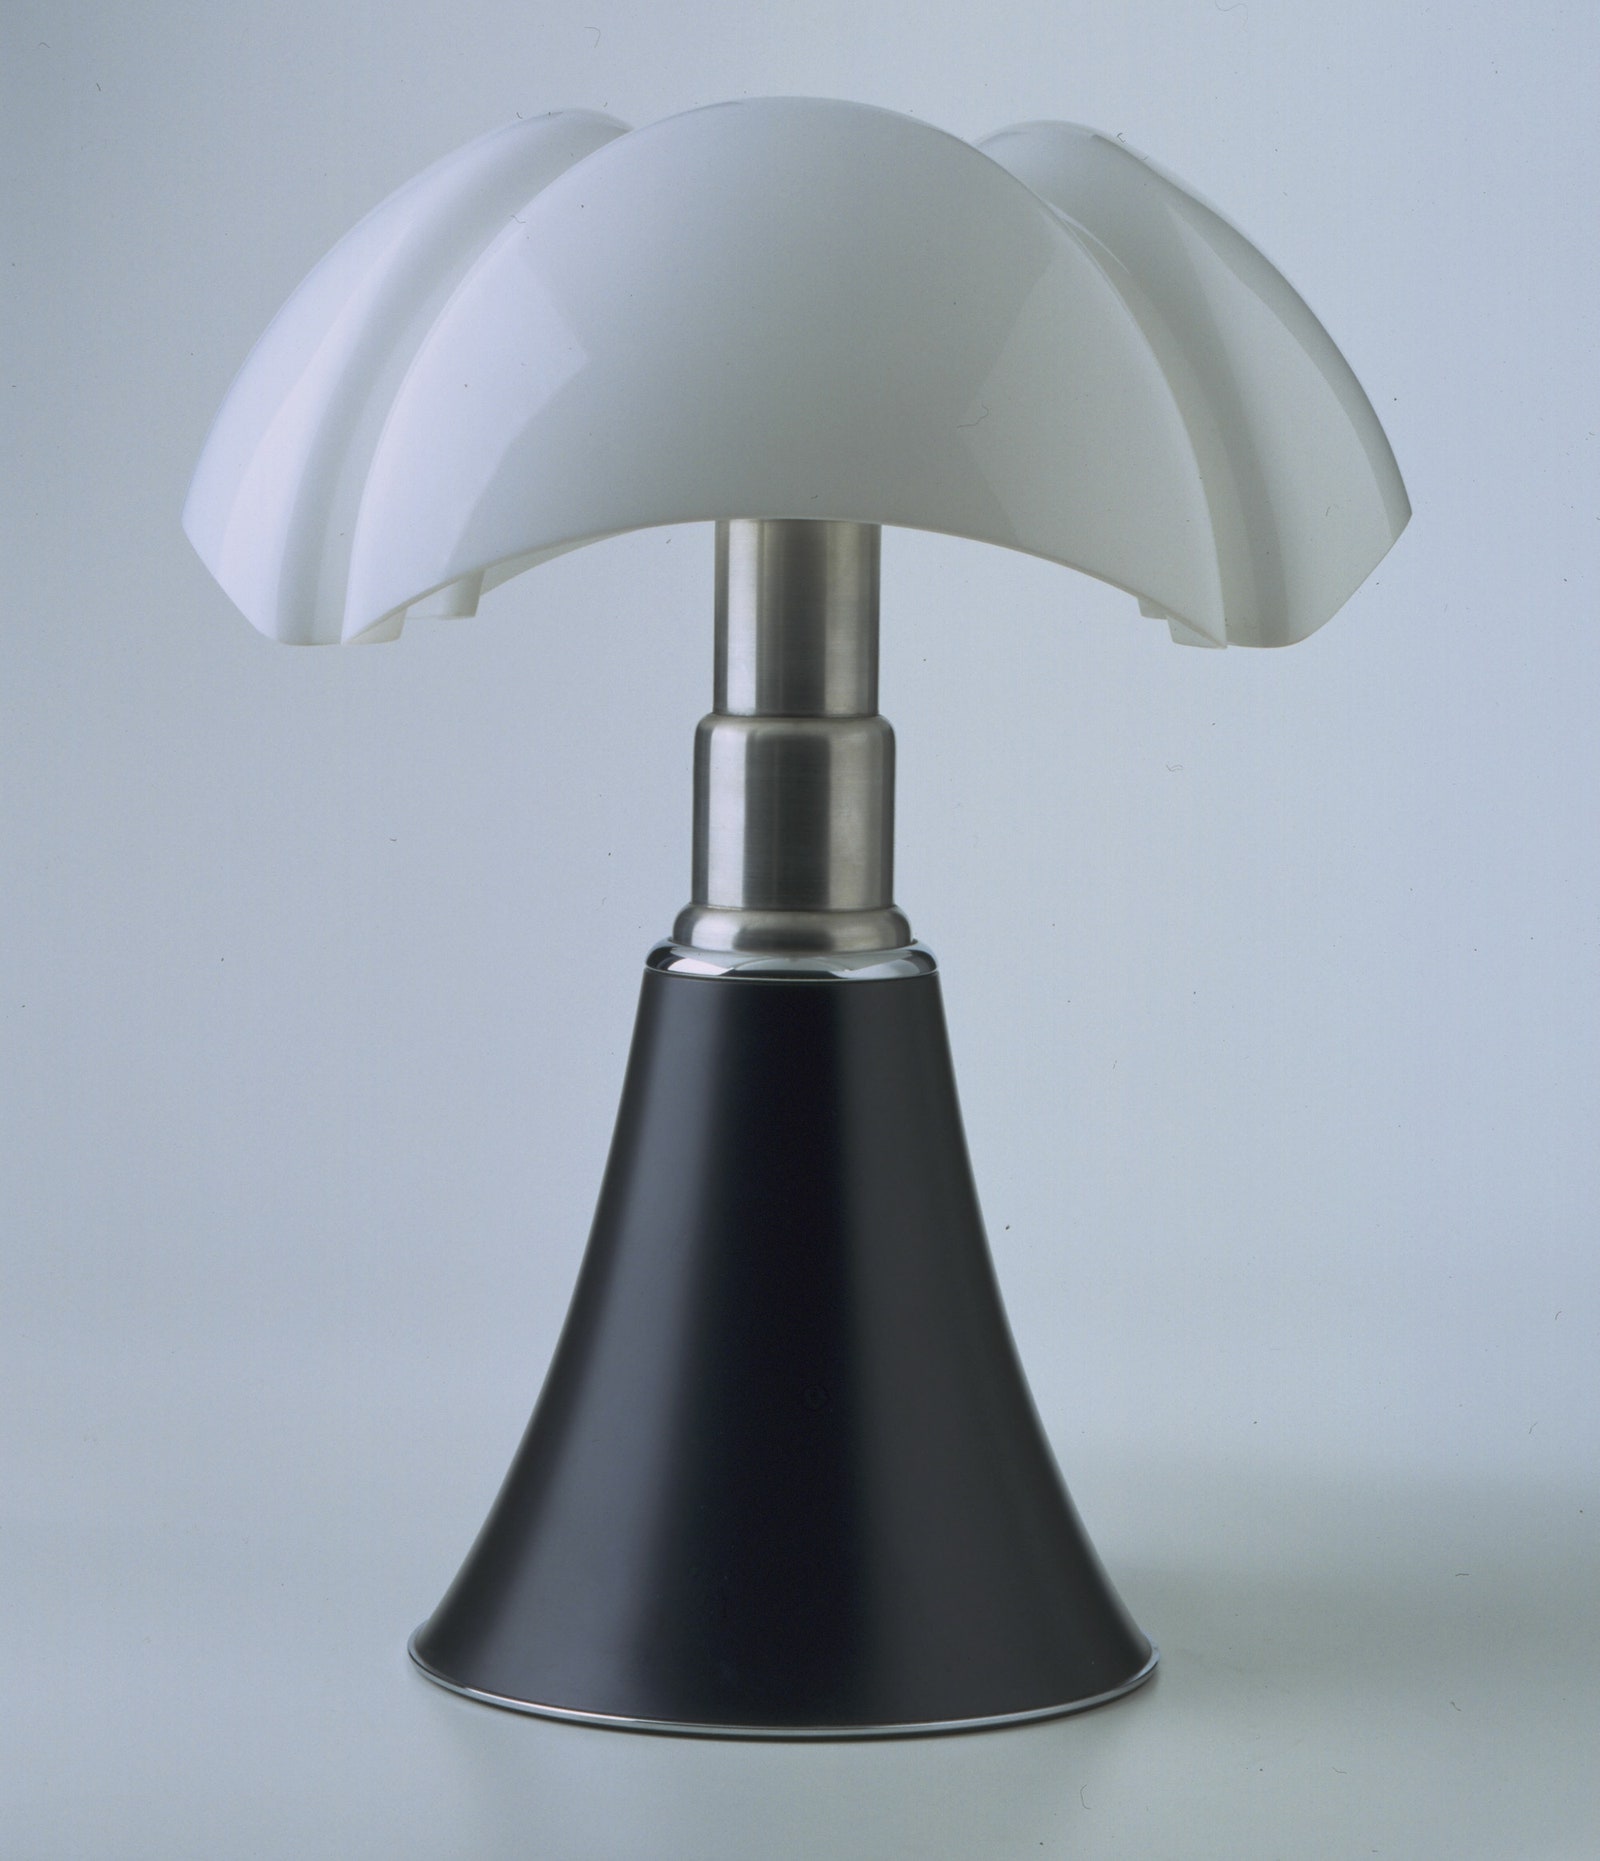 Лампа Pipistrello 1965. Дизайнер Гаэ Ауленти.